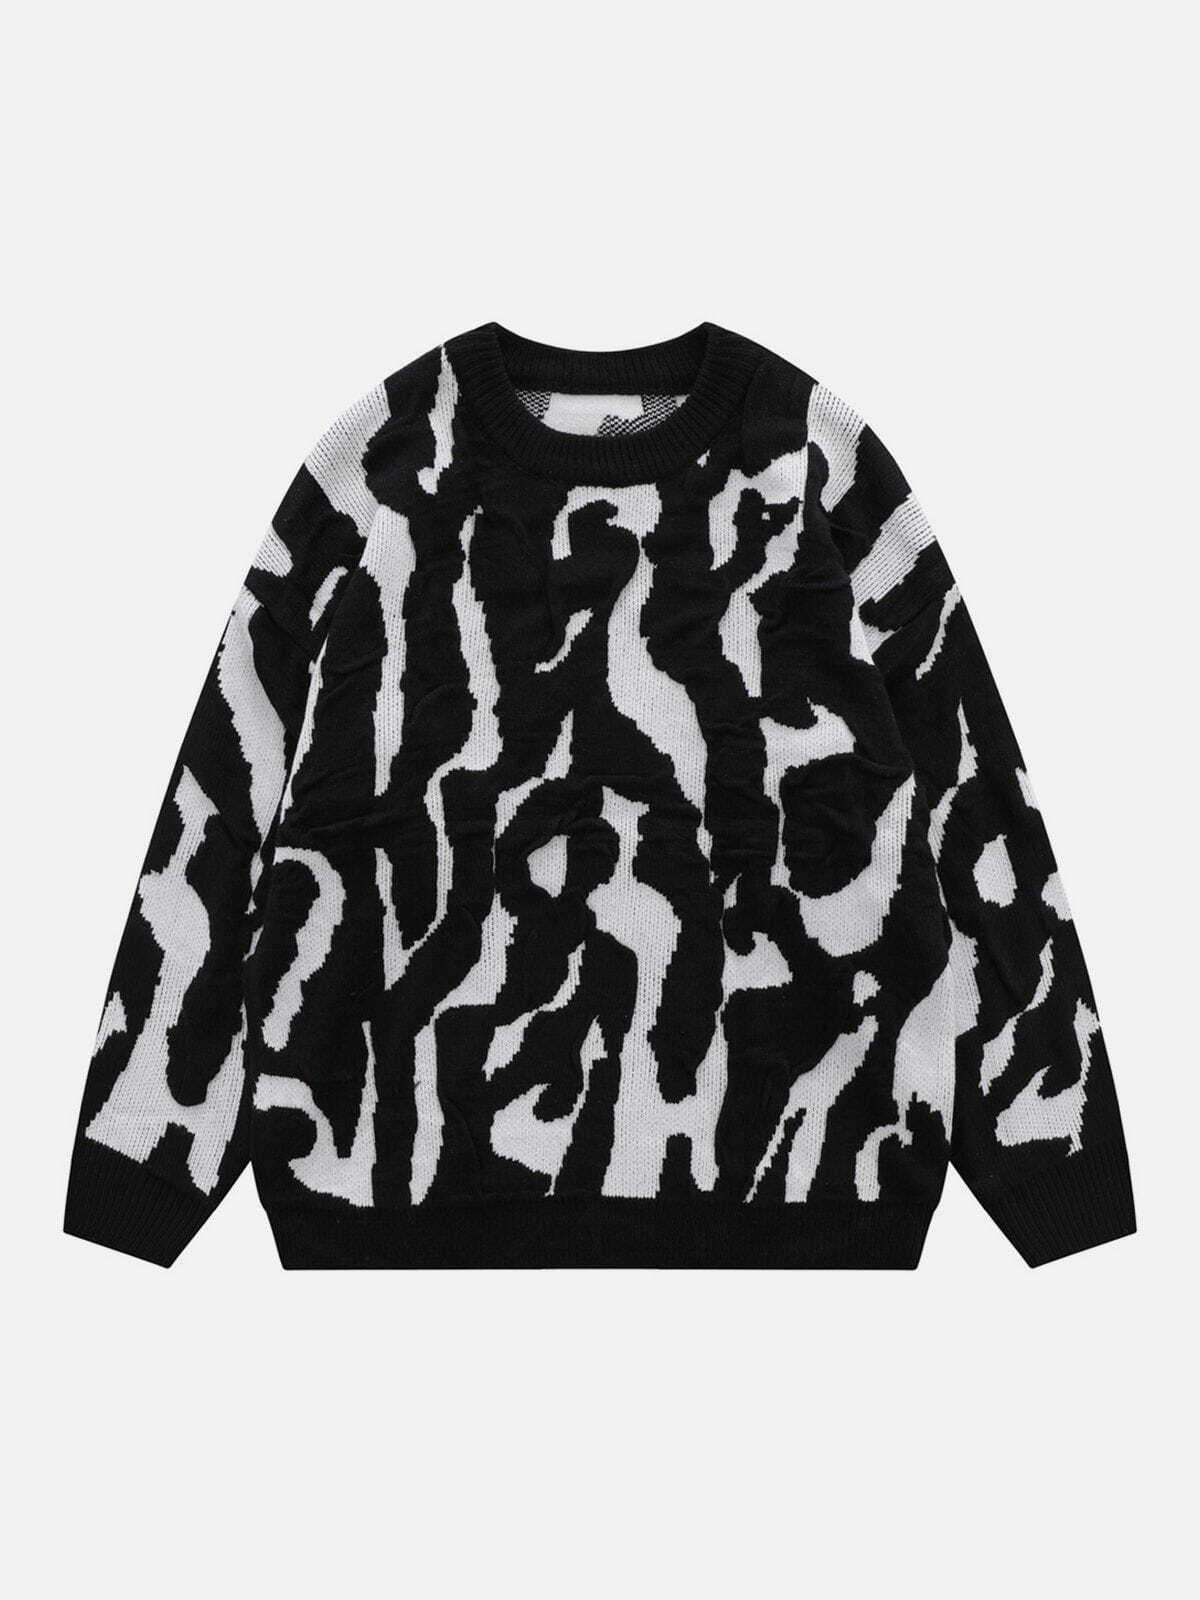 zebra print jacquard sweater edgy & vibrant streetwear 5099